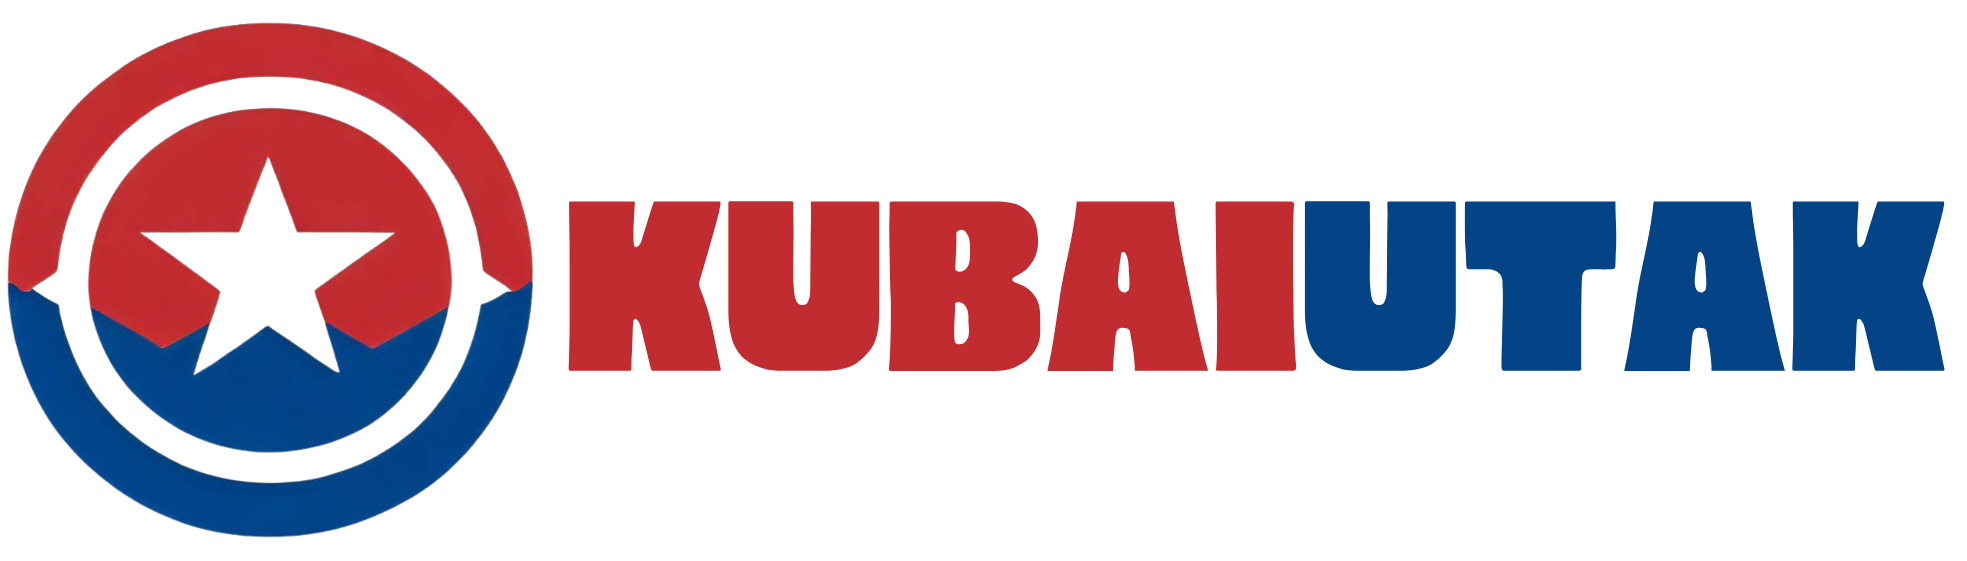 Kubai utak I kubaiutak.com